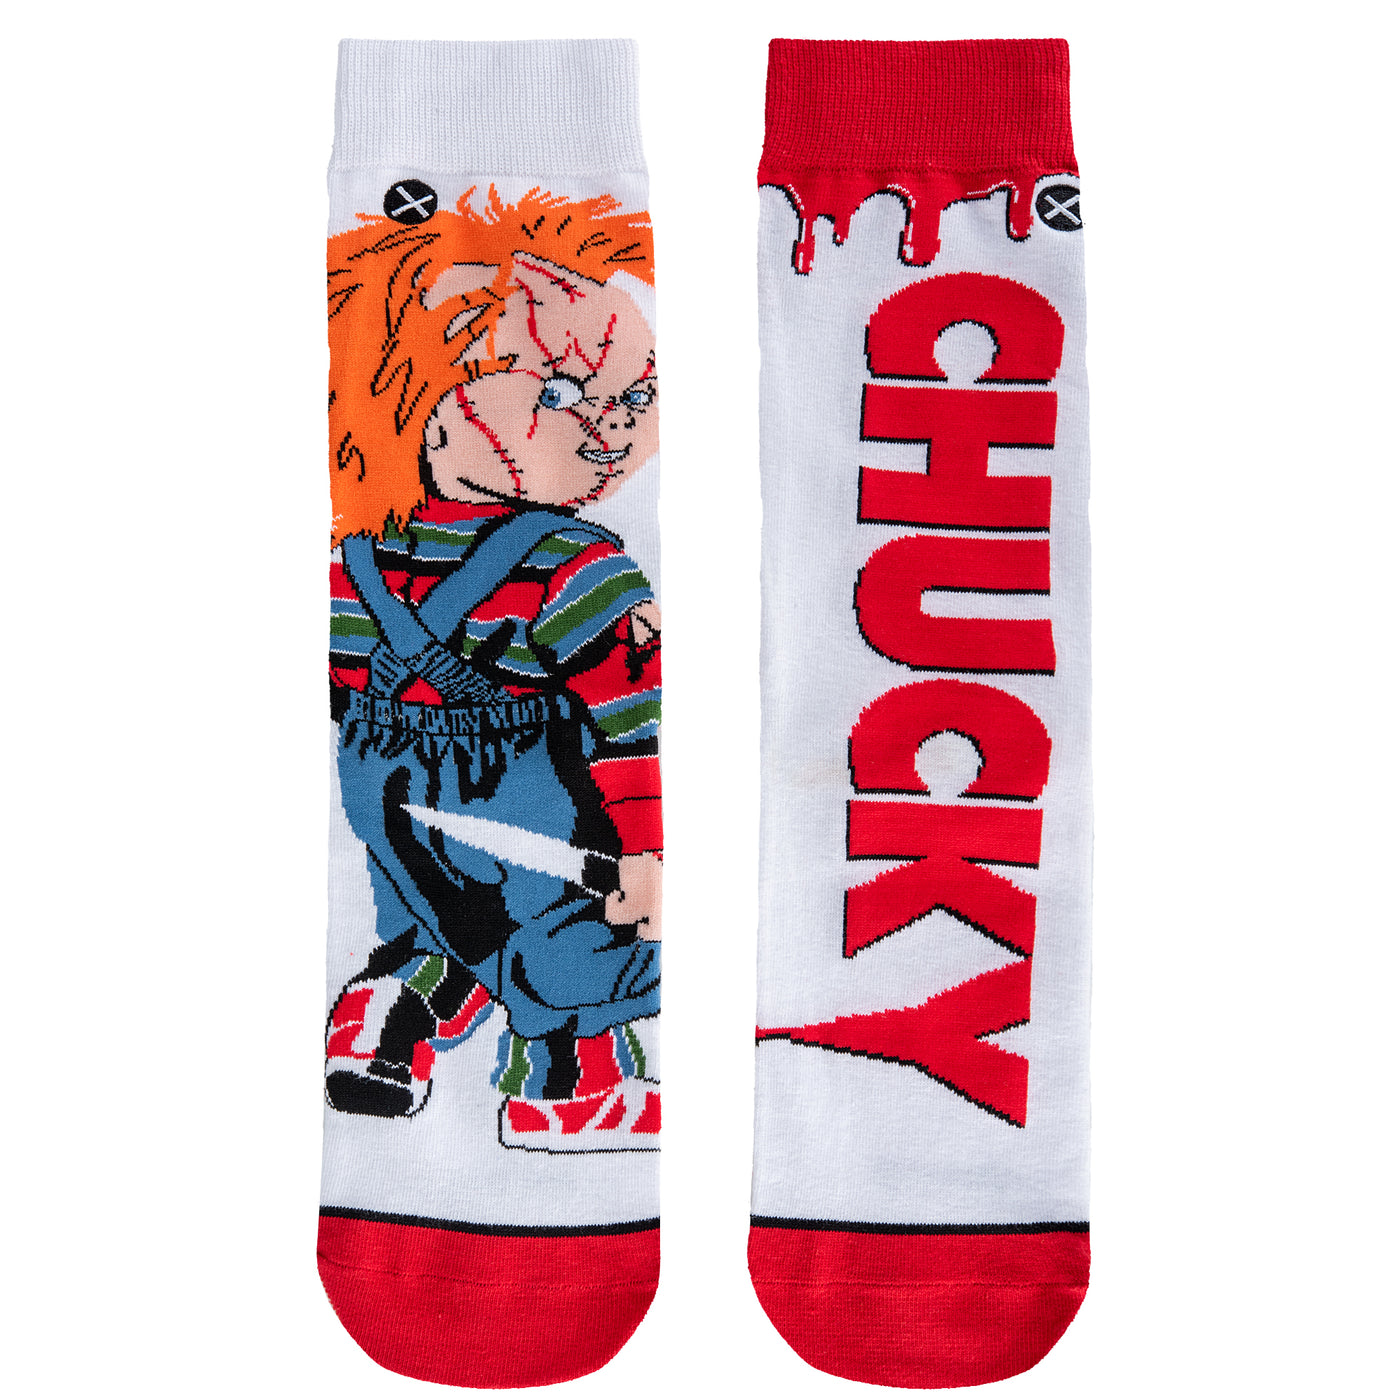 Chuckys Revenge Crew Socks